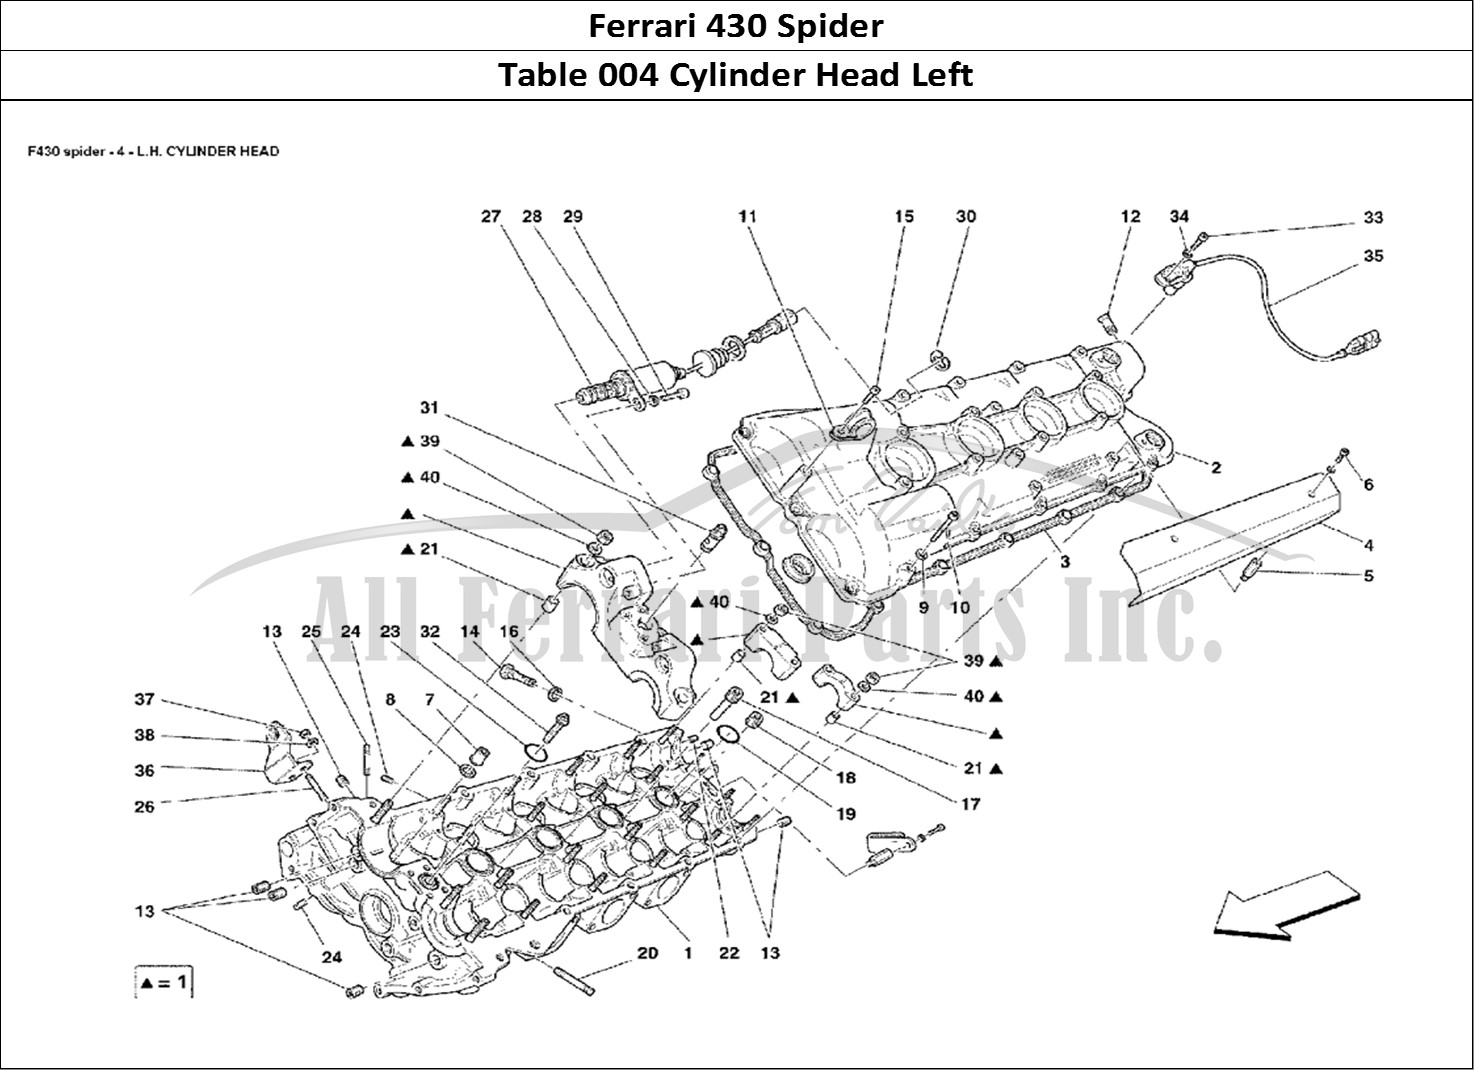 Ferrari Parts Ferrari 430 Spider Page 004 L.H. Cylinder Head